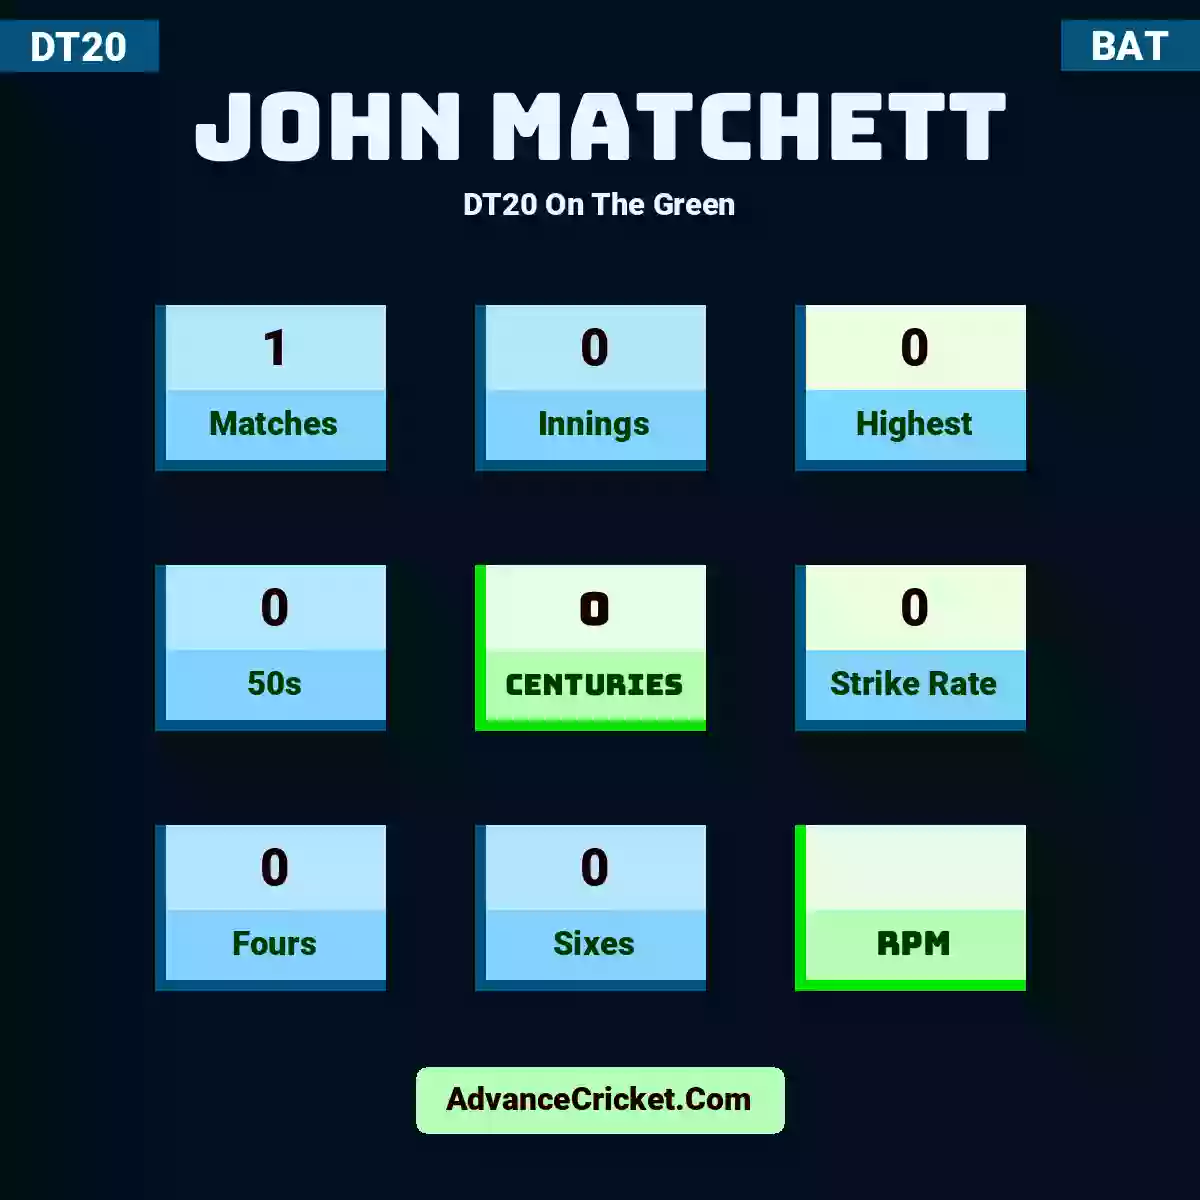 John Matchett DT20  On The Green, John Matchett played 1 matches, scored 0 runs as highest, 0 half-centuries, and 0 centuries, with a strike rate of 0. J.Matchett hit 0 fours and 0 sixes.